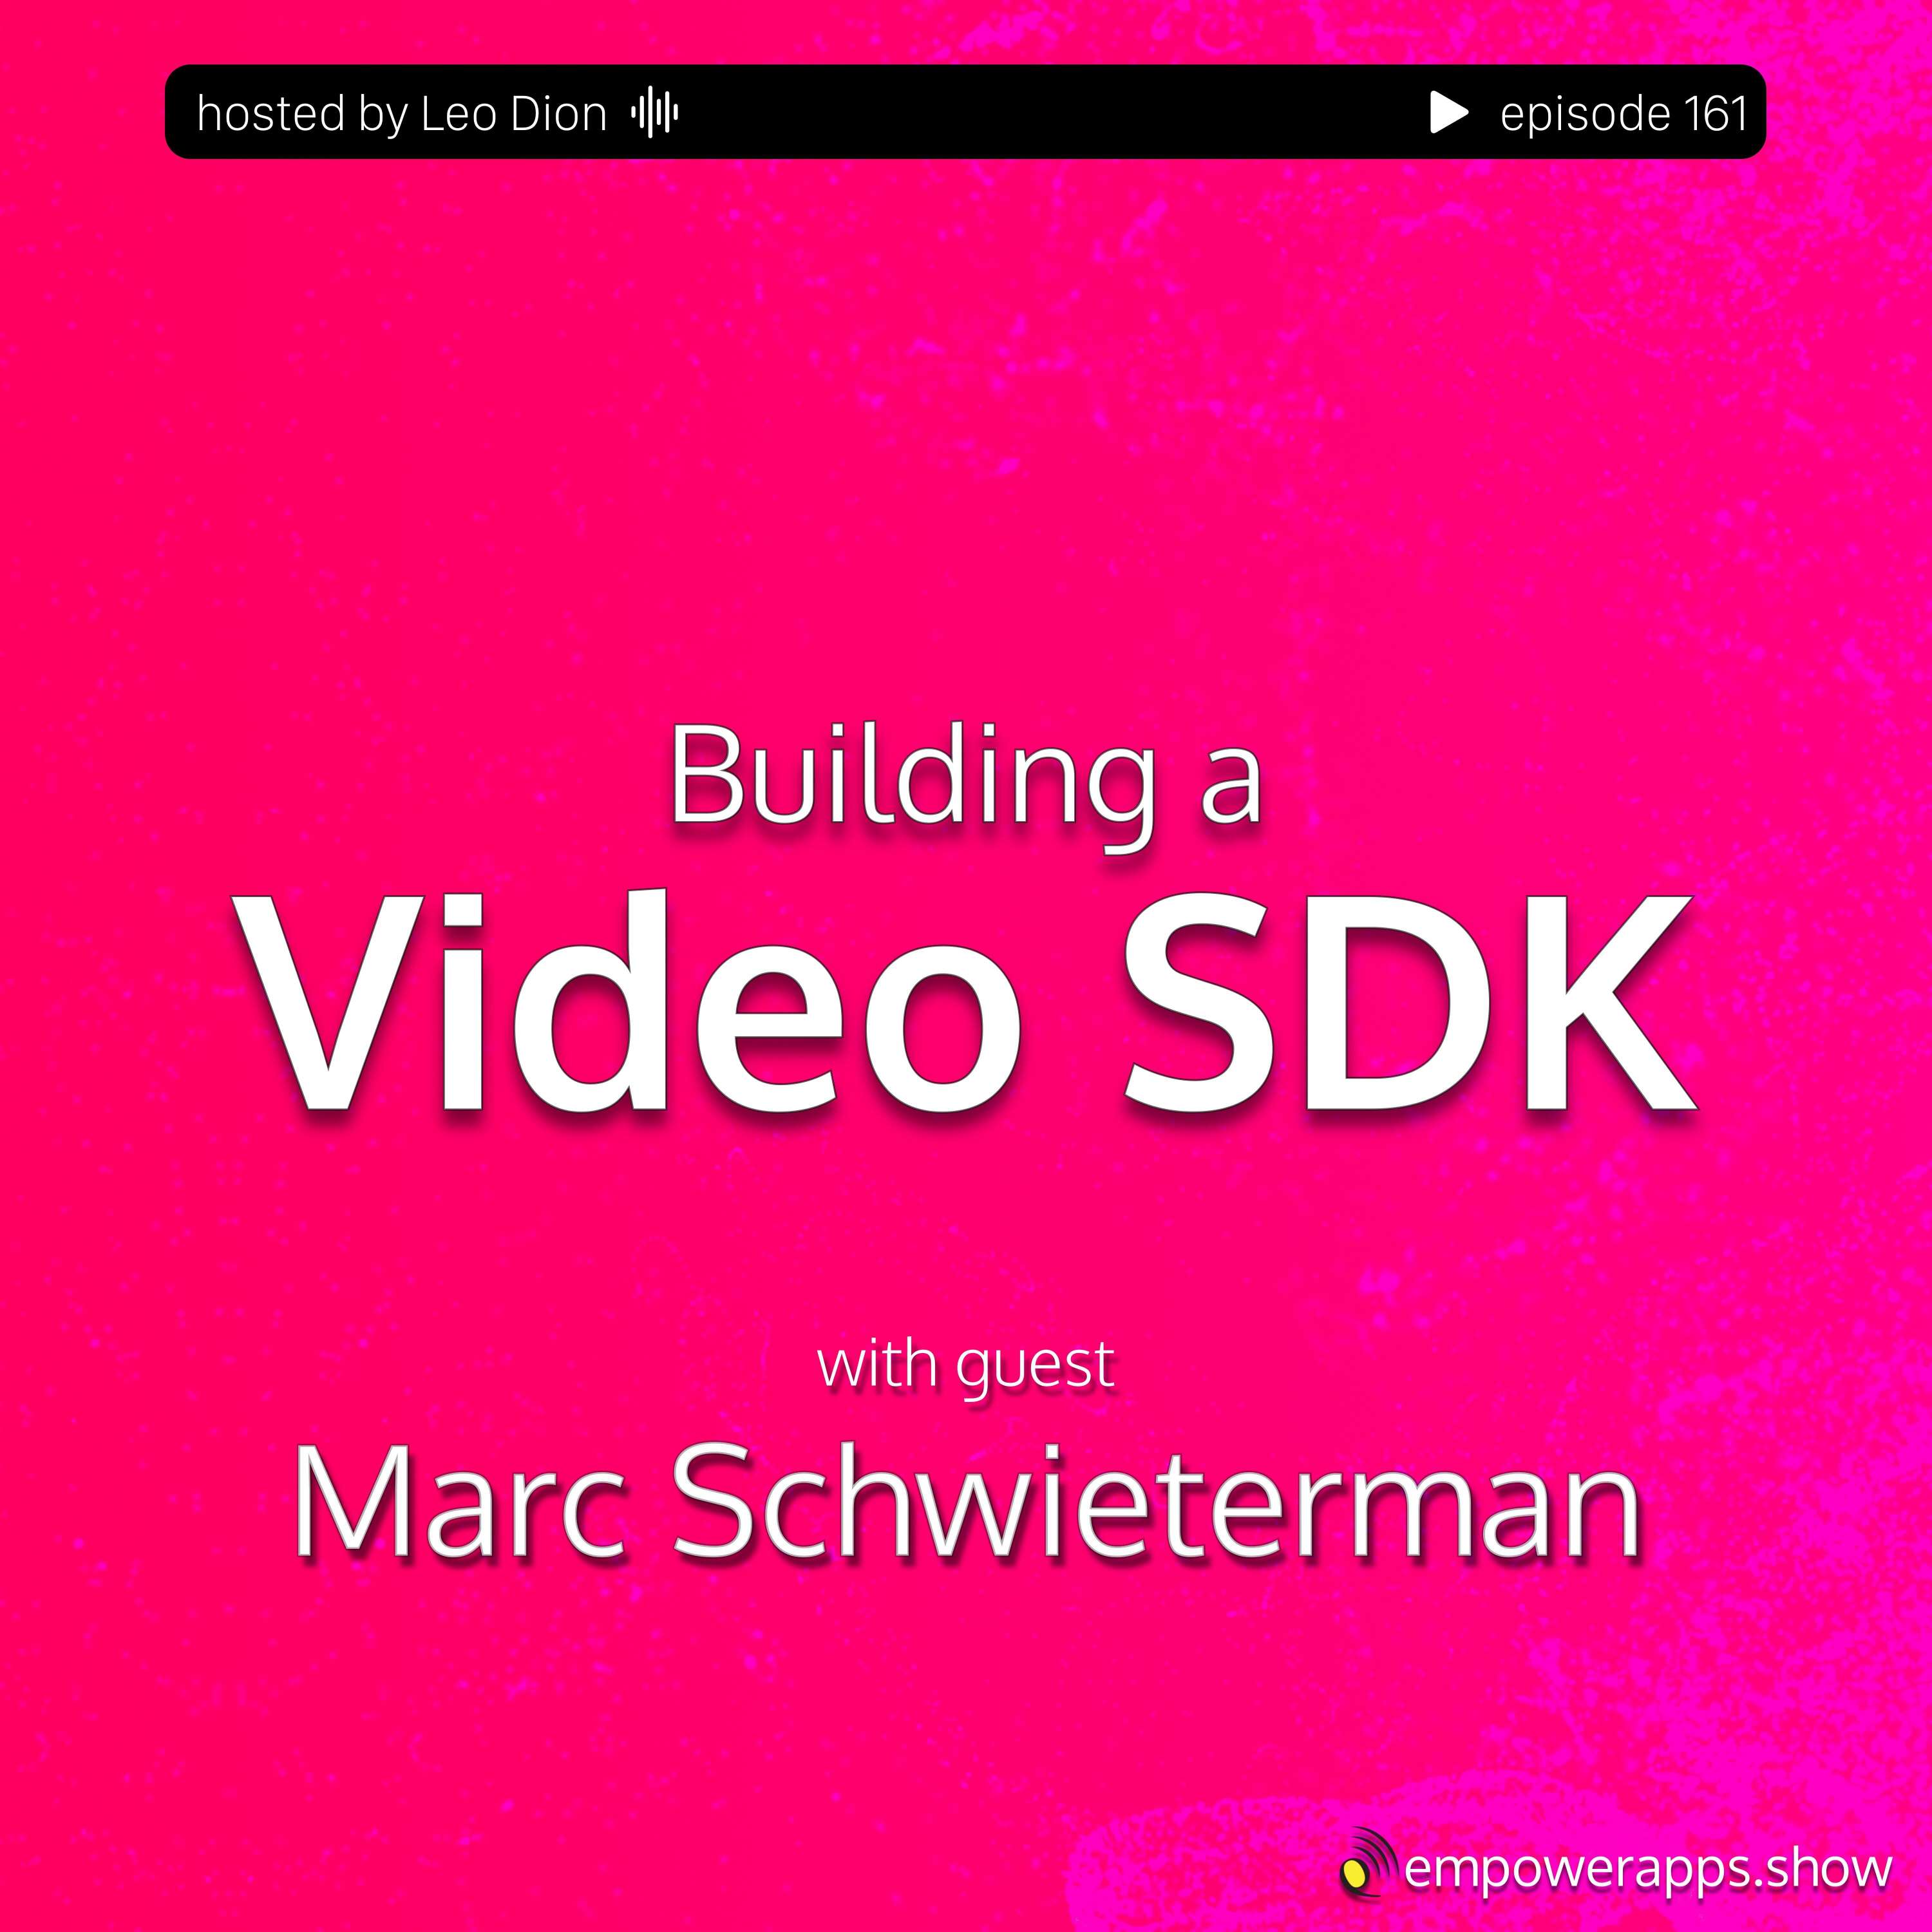 Building a Video SDK with Marc Schwieterman